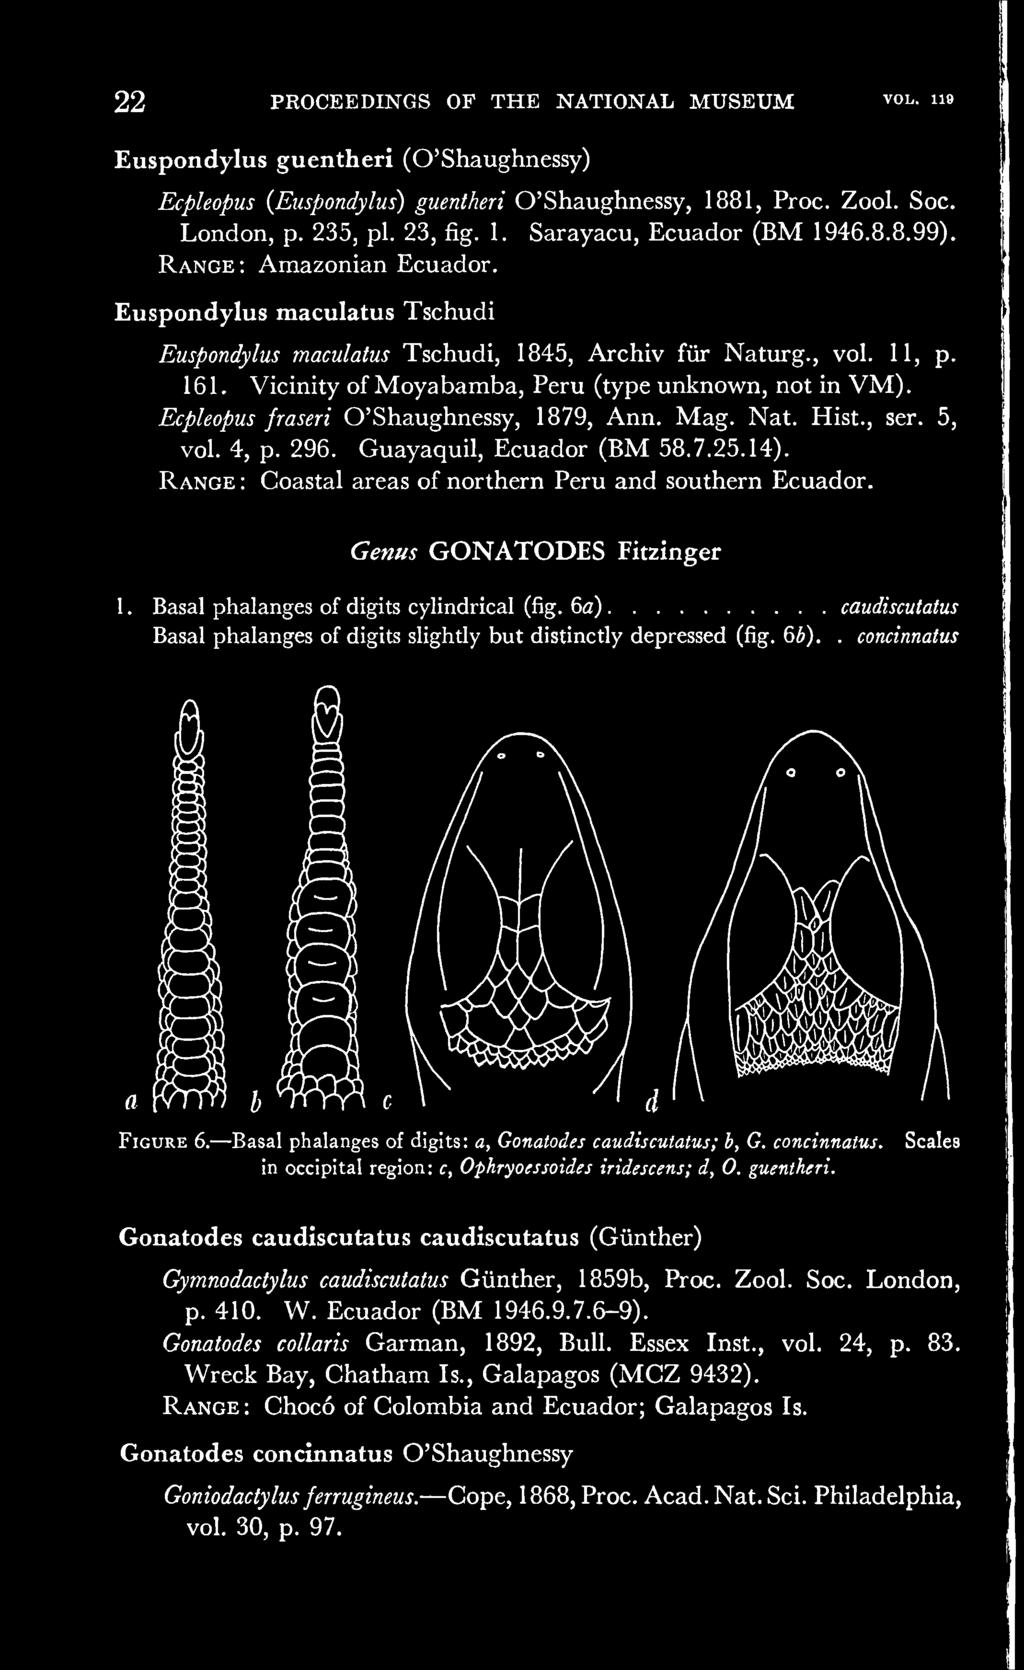 Ecpleopus fraseri O'Shaughnessy, 1879, Ann. Mag. Nat. Hist., ser. 5, vol. 4, p. 296. Guayaquil, Ecuador (BM 58.7.25.14). Range : Coastal areas of northern Peru and southern Ecuador.